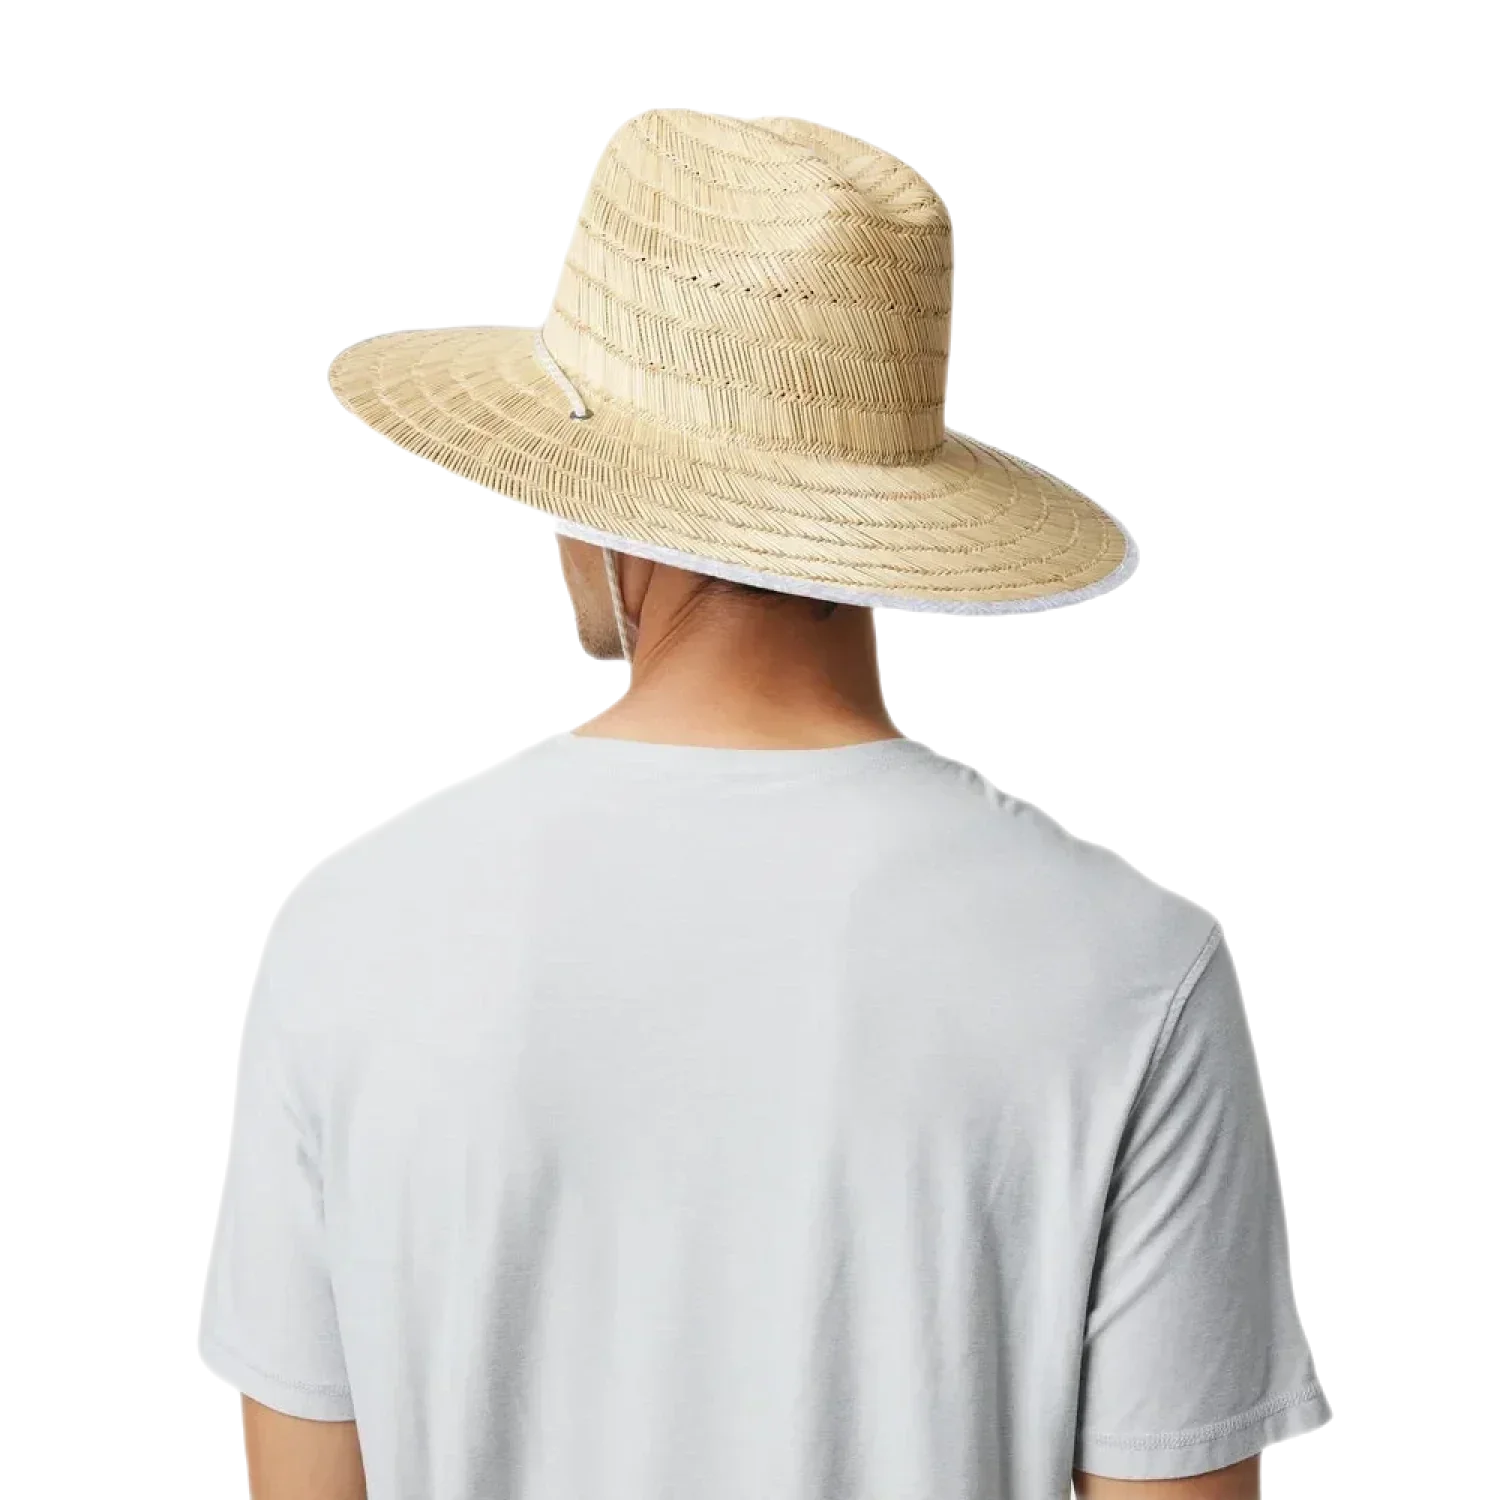 Vuori HATS - HATS BILLED - HATS BILLED Beacons Lifeguard Hat UBS UMBER SAGO OS